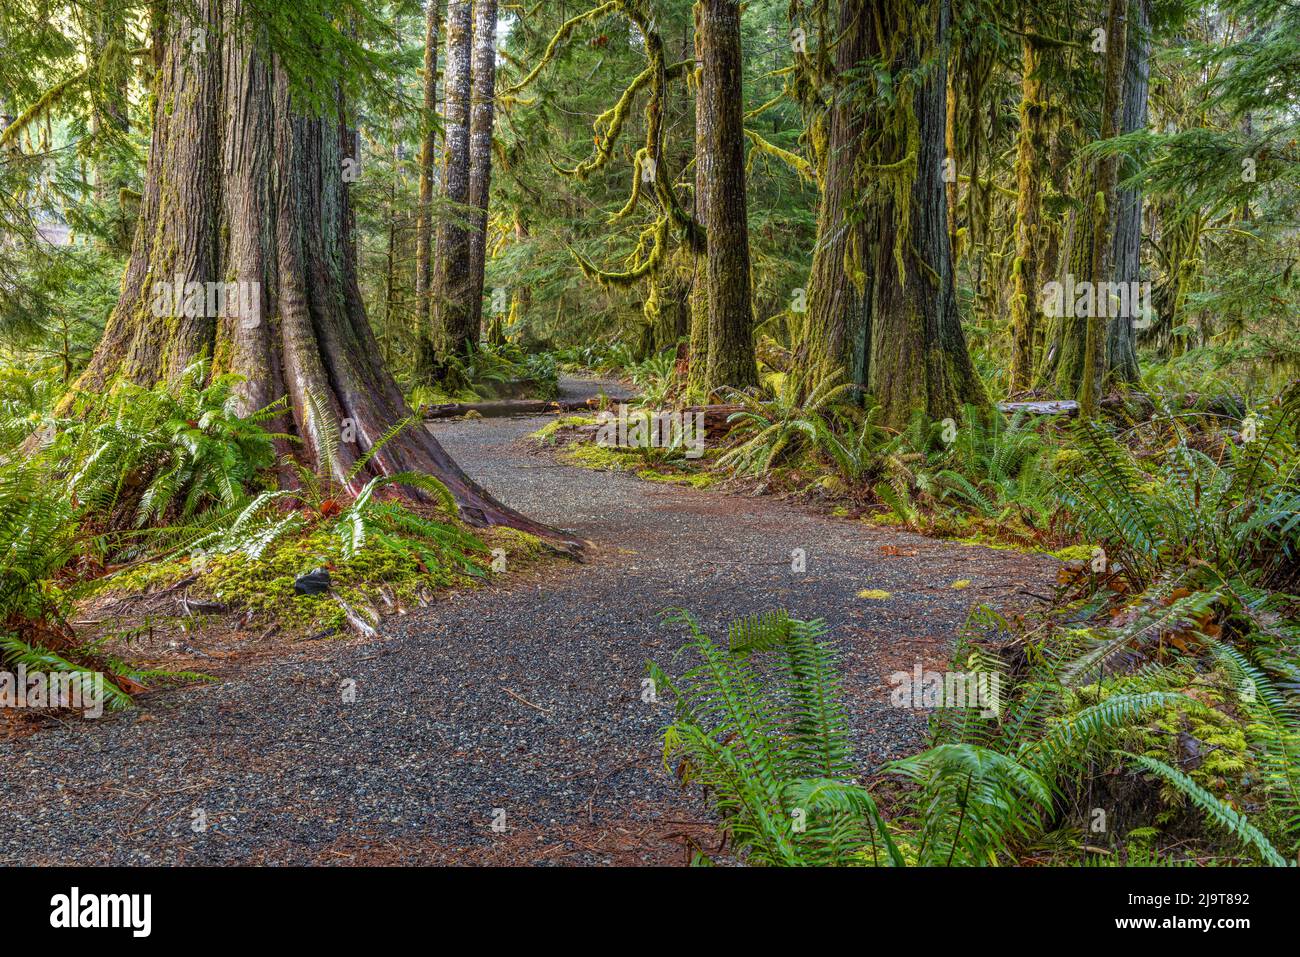 USA, Washington State, Olympic National Park. Weg durch moosigen Wald. Stockfoto